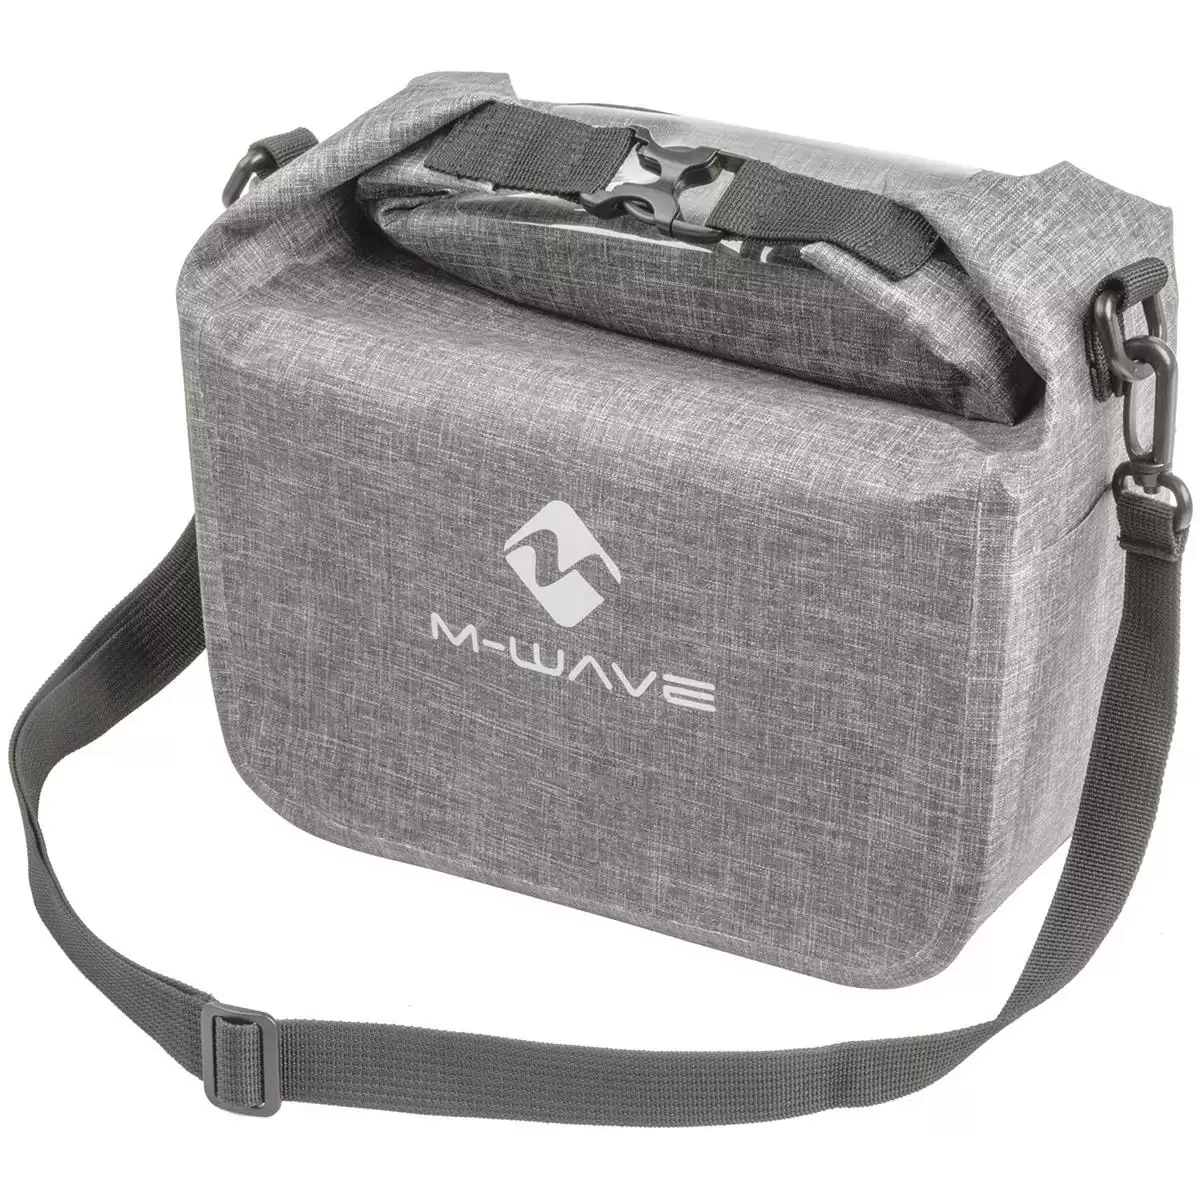 Suburban front handlebar bag gray 7 liters - image